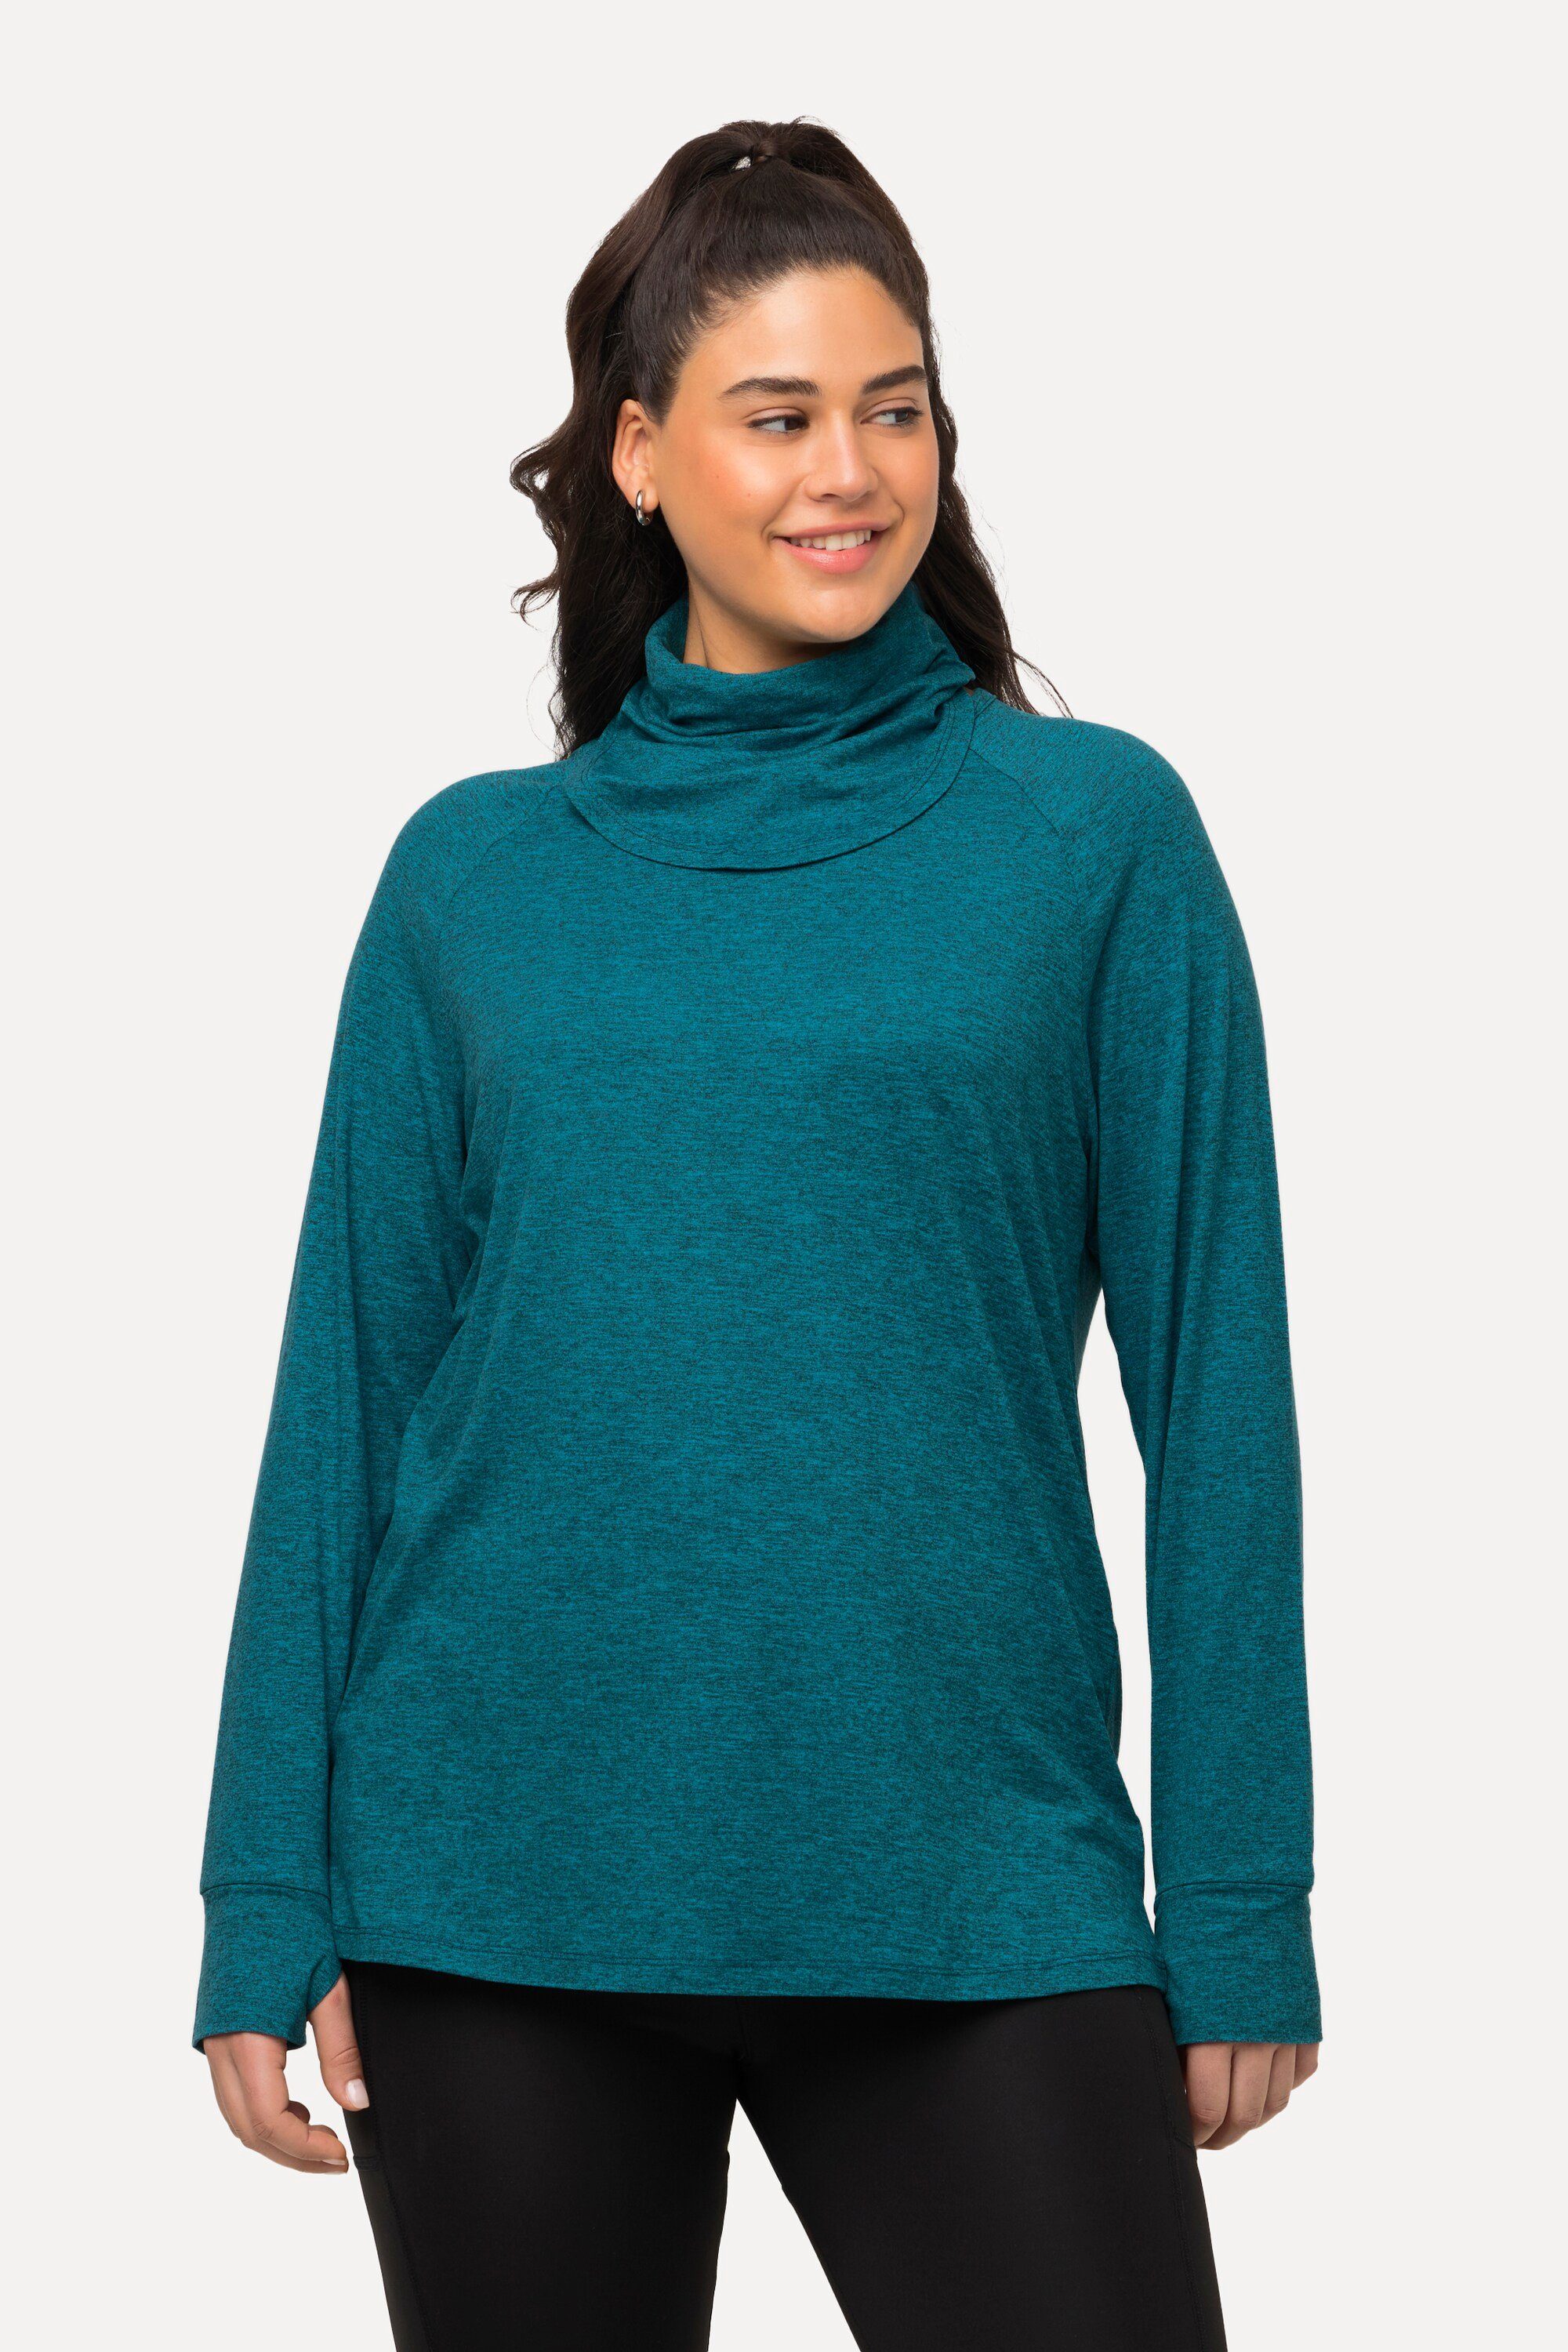 Rundhals türkis Sweater Loop Ulla Popken extraweich Langarm Sweatshirt